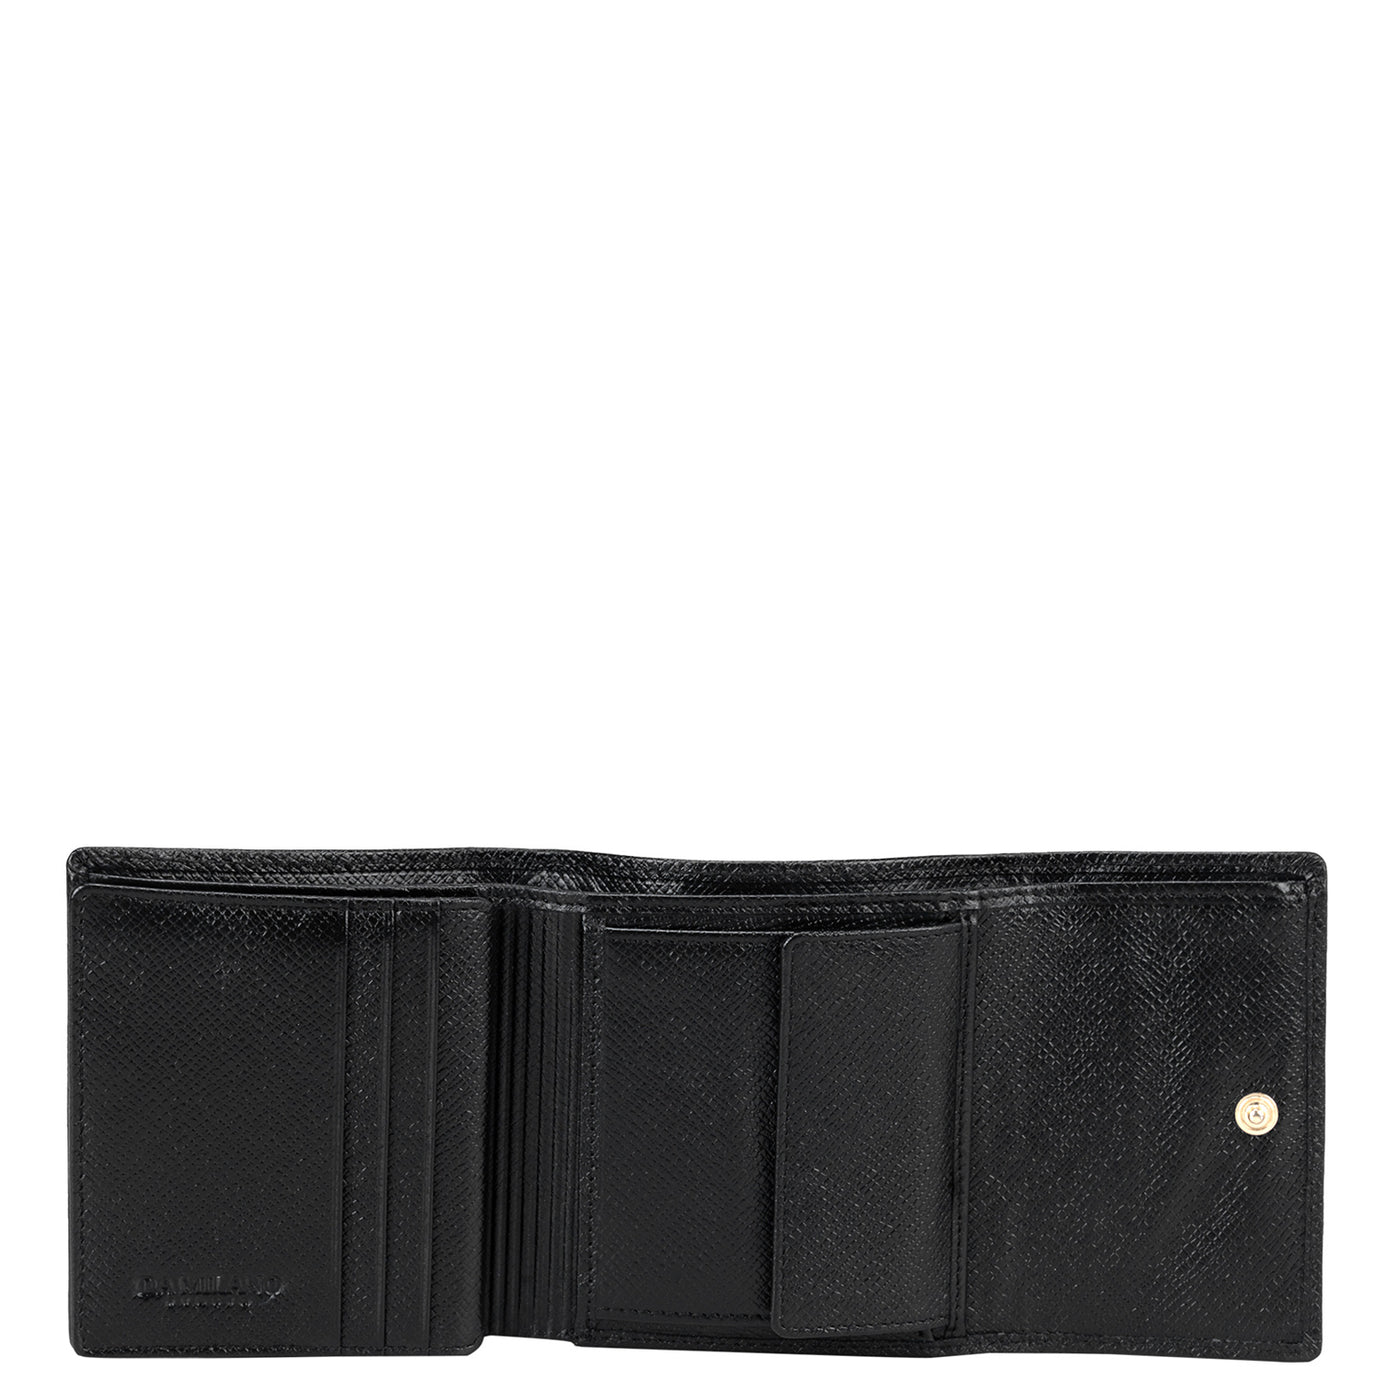 Black Croco Leather Ladies Wallet & Keychain Gift Set